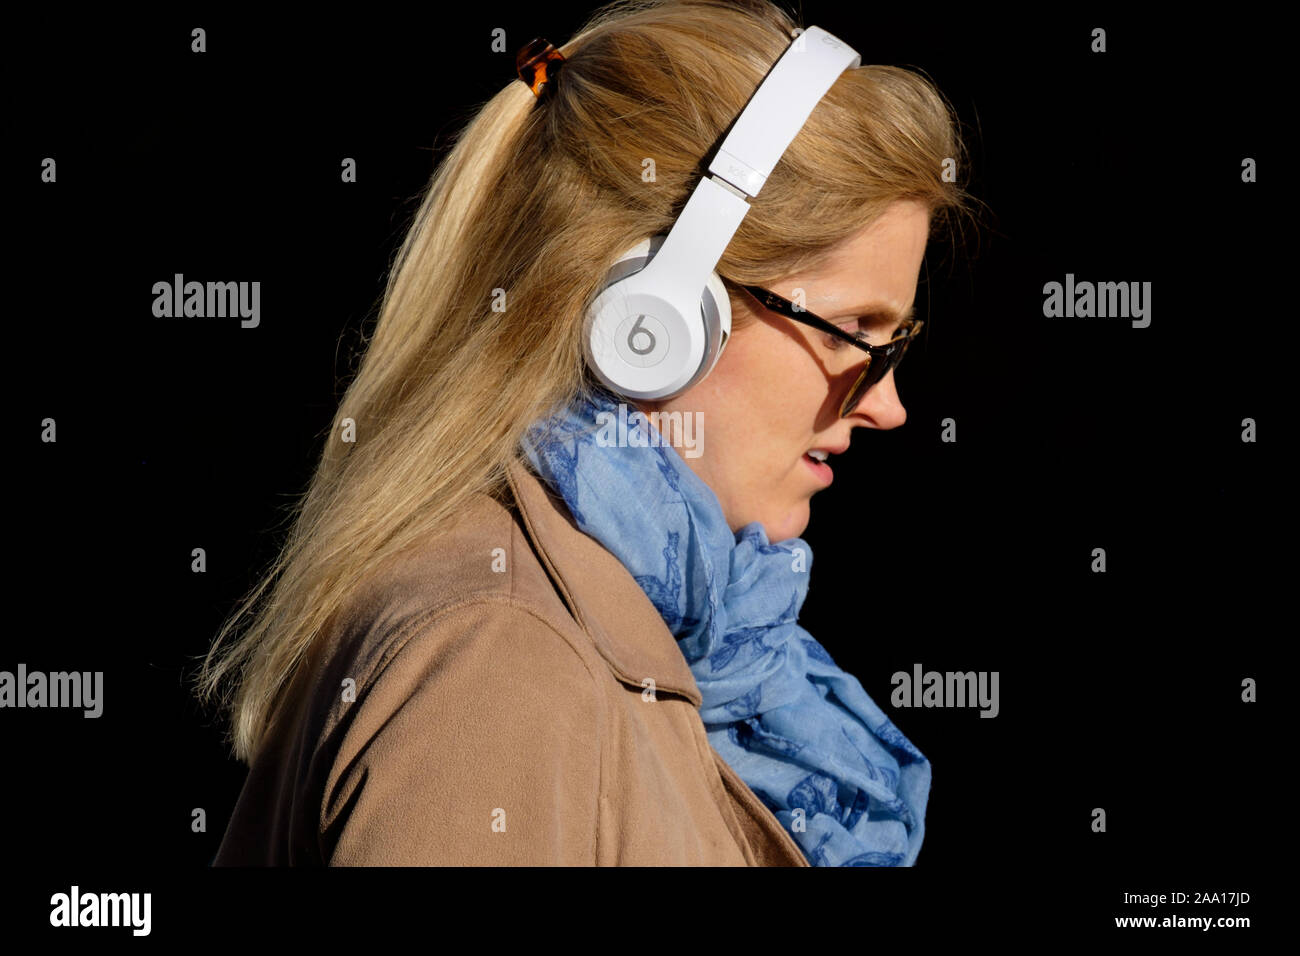 Female, 20s, blonde hair,  smart, fashionable dress, scarf, Beats headphones. Stock Photo